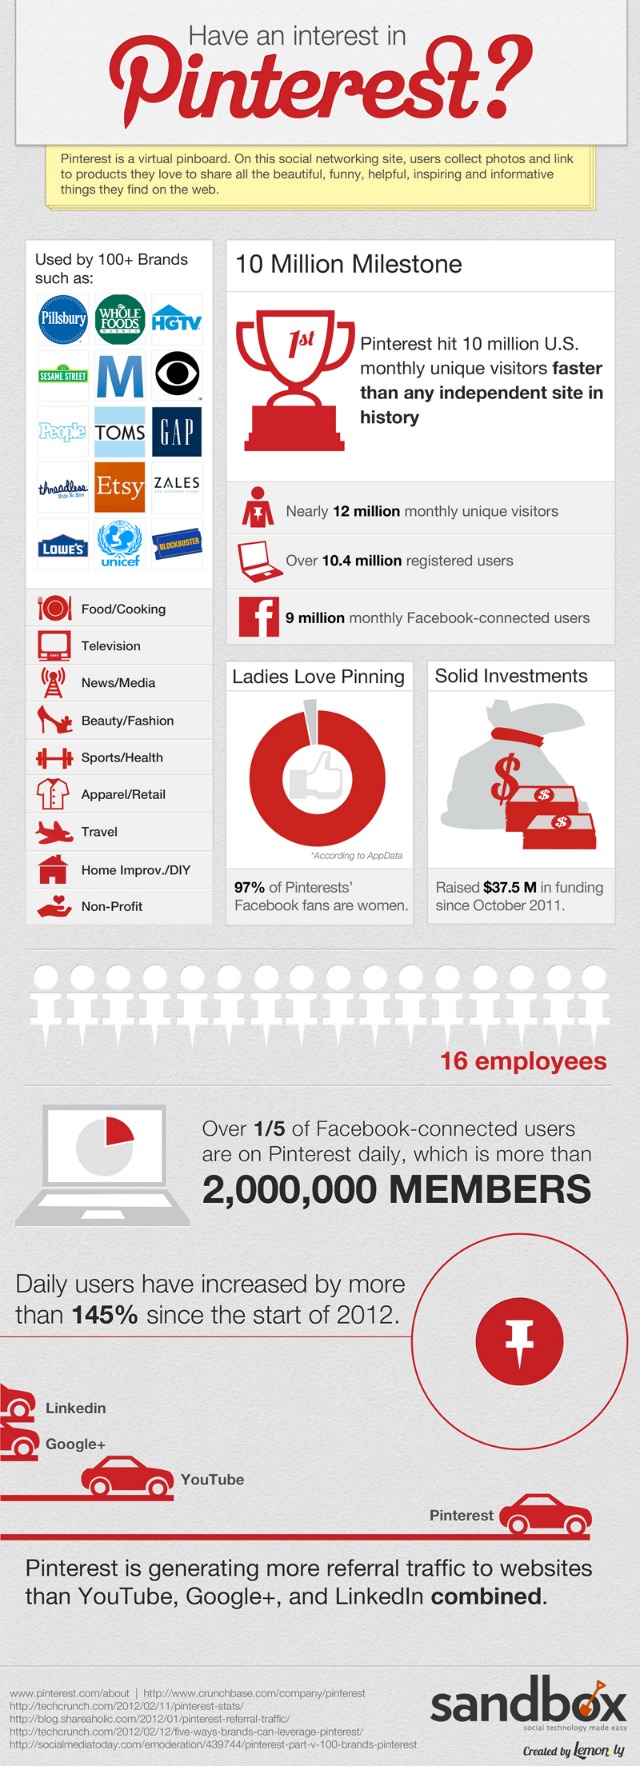 Pinterest-infographic-640